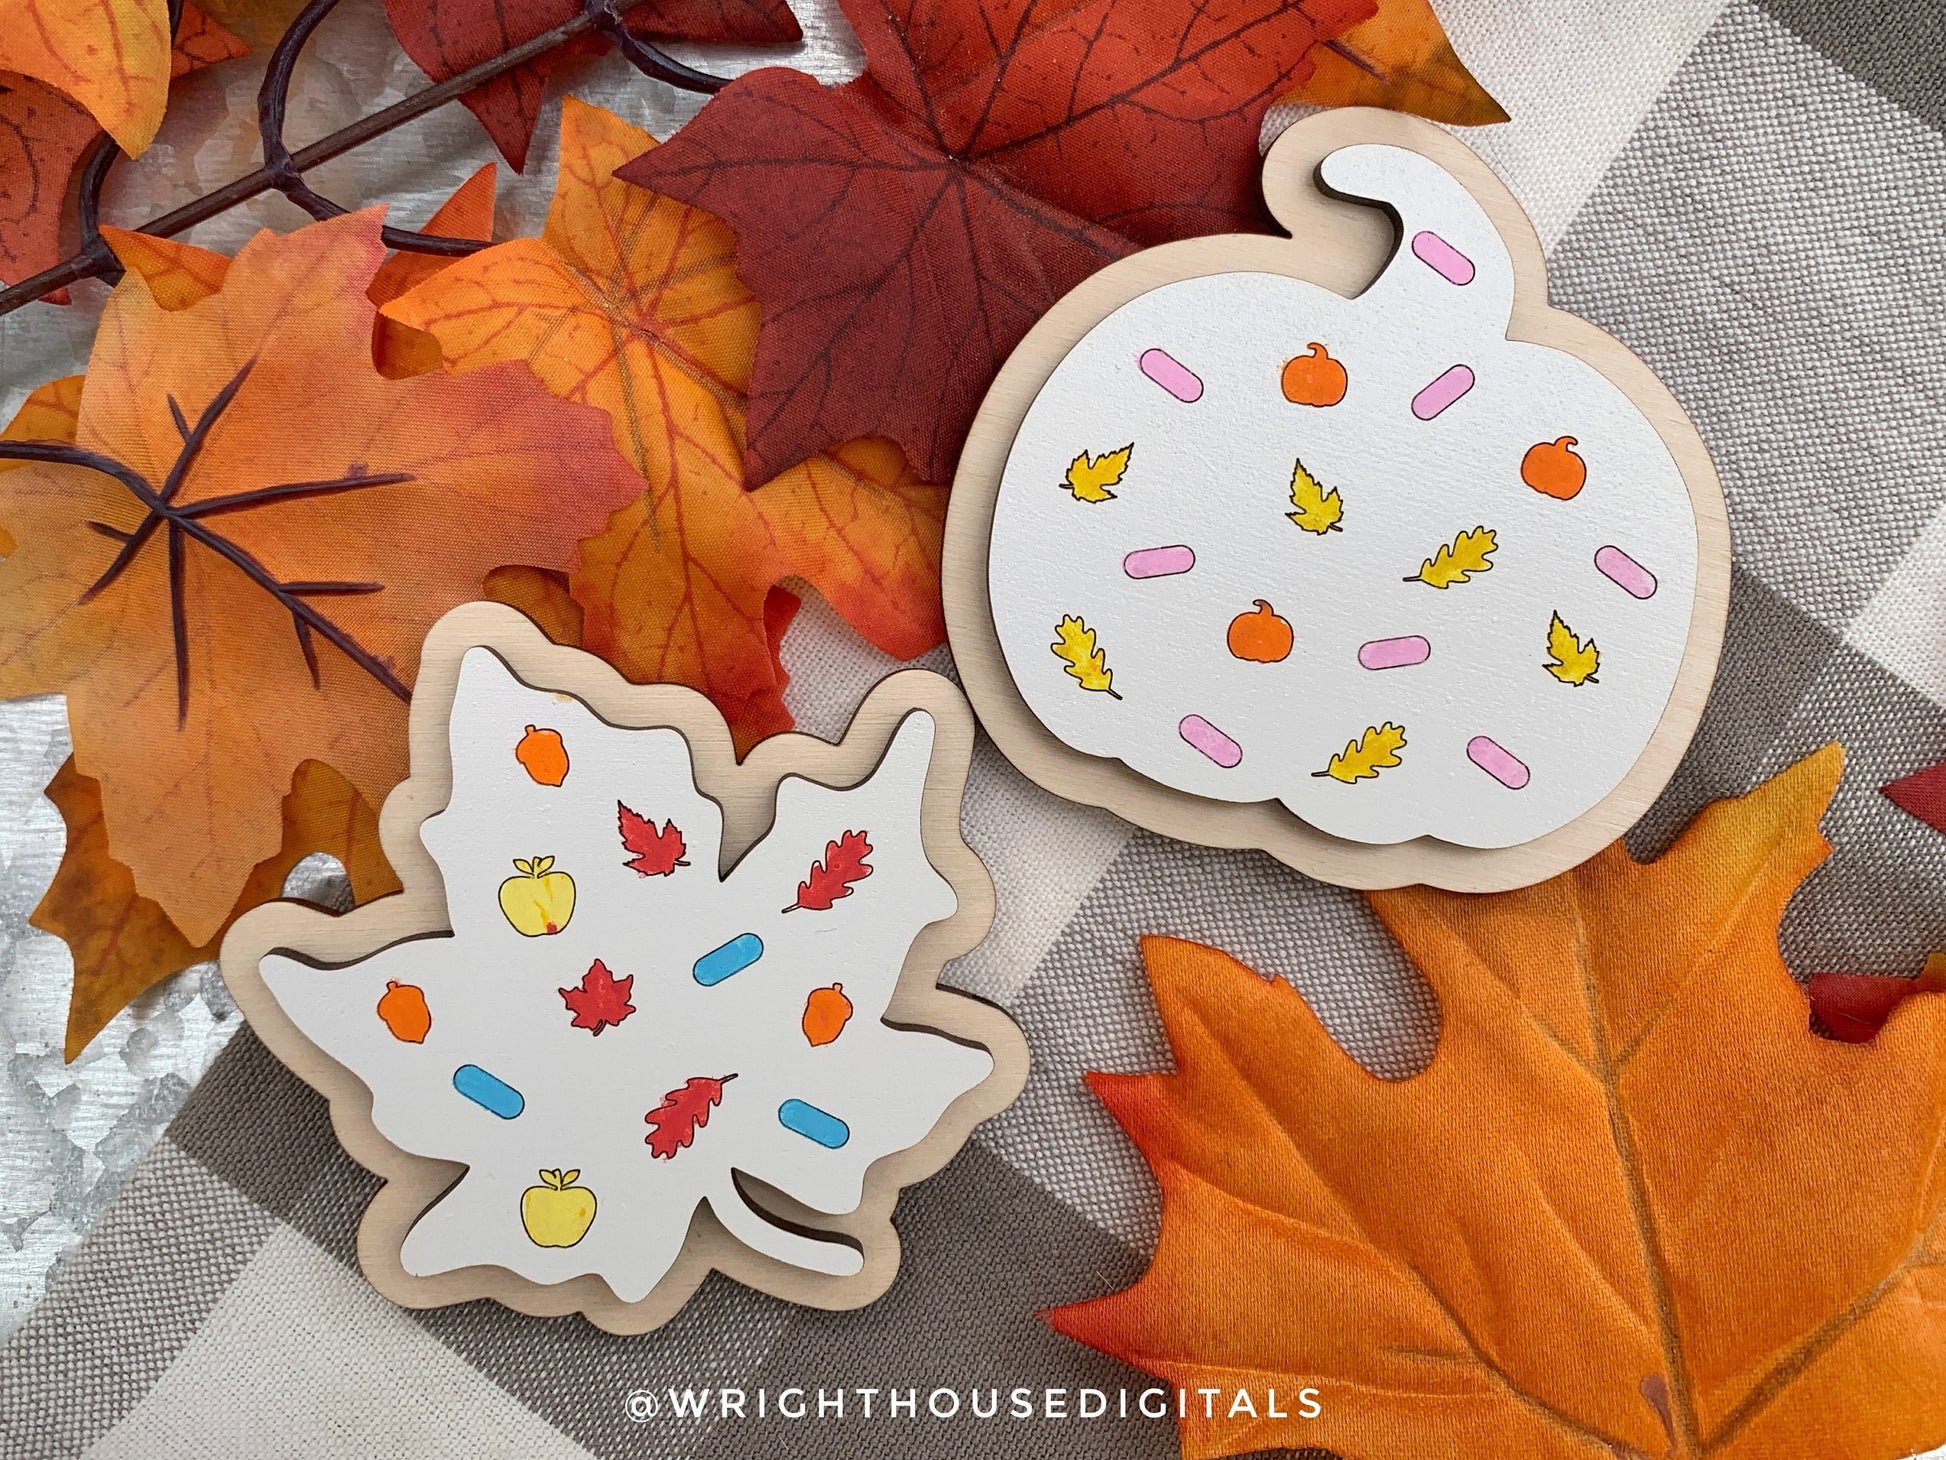 Fall Sprinkle Cookies Bundle - Seasonal Tiered Tray Decor and DIY Kits - Cut File For Glowforge Lasers - Digital SVG File